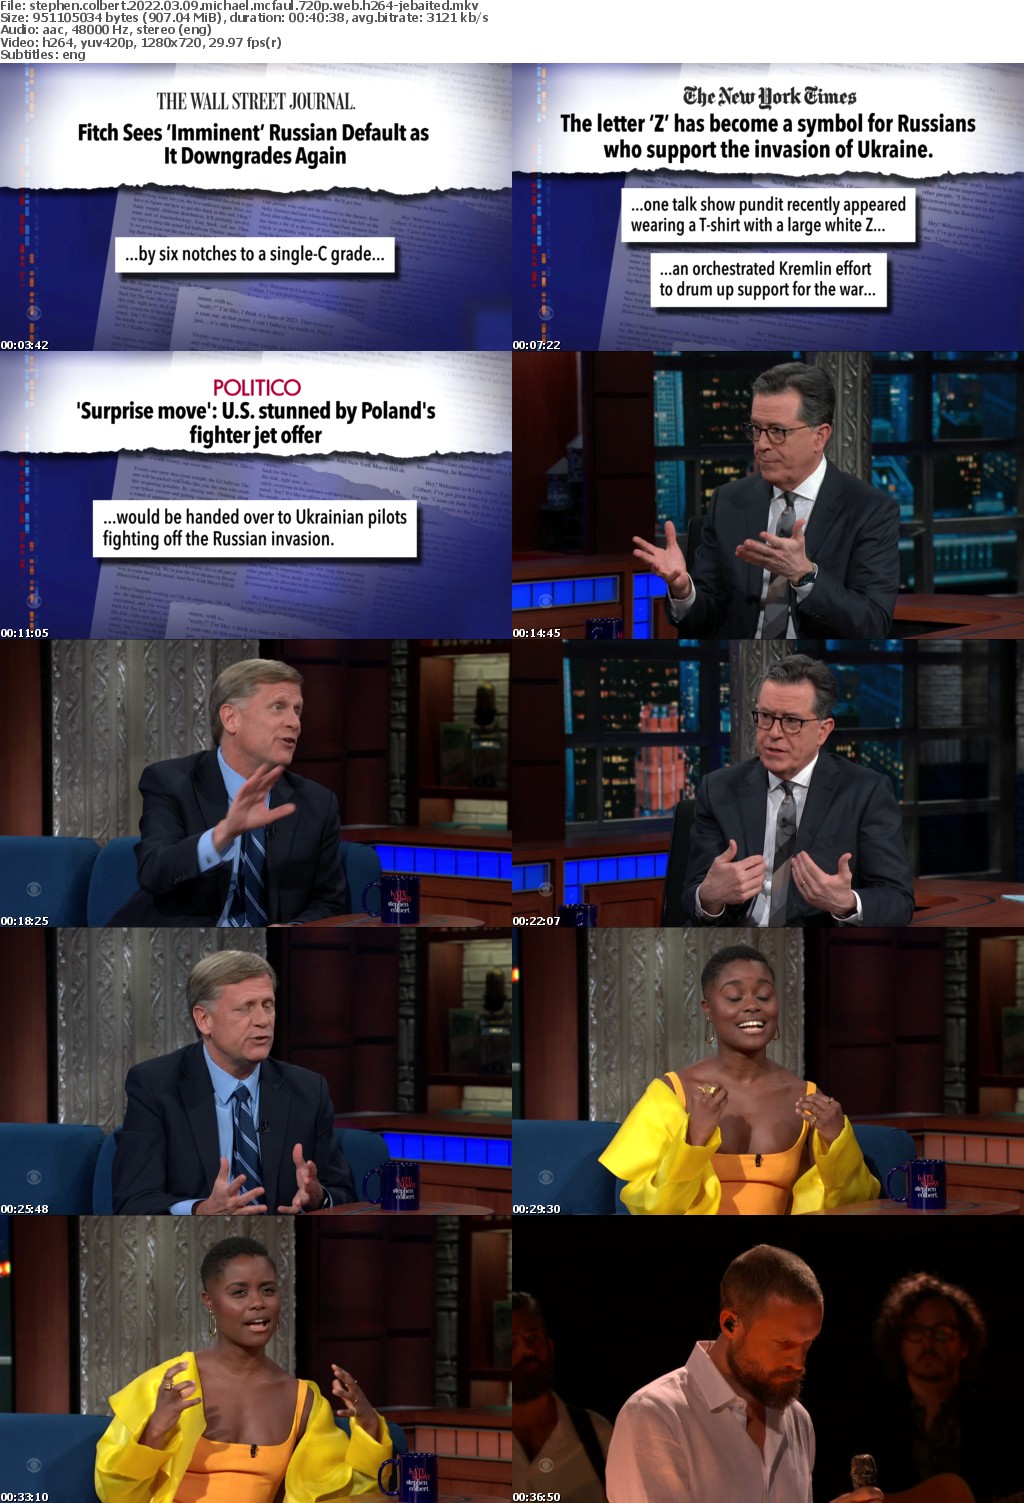 Stephen Colbert 2022 03 09 Michael McFaul 720p WEB H264-JEBAITED